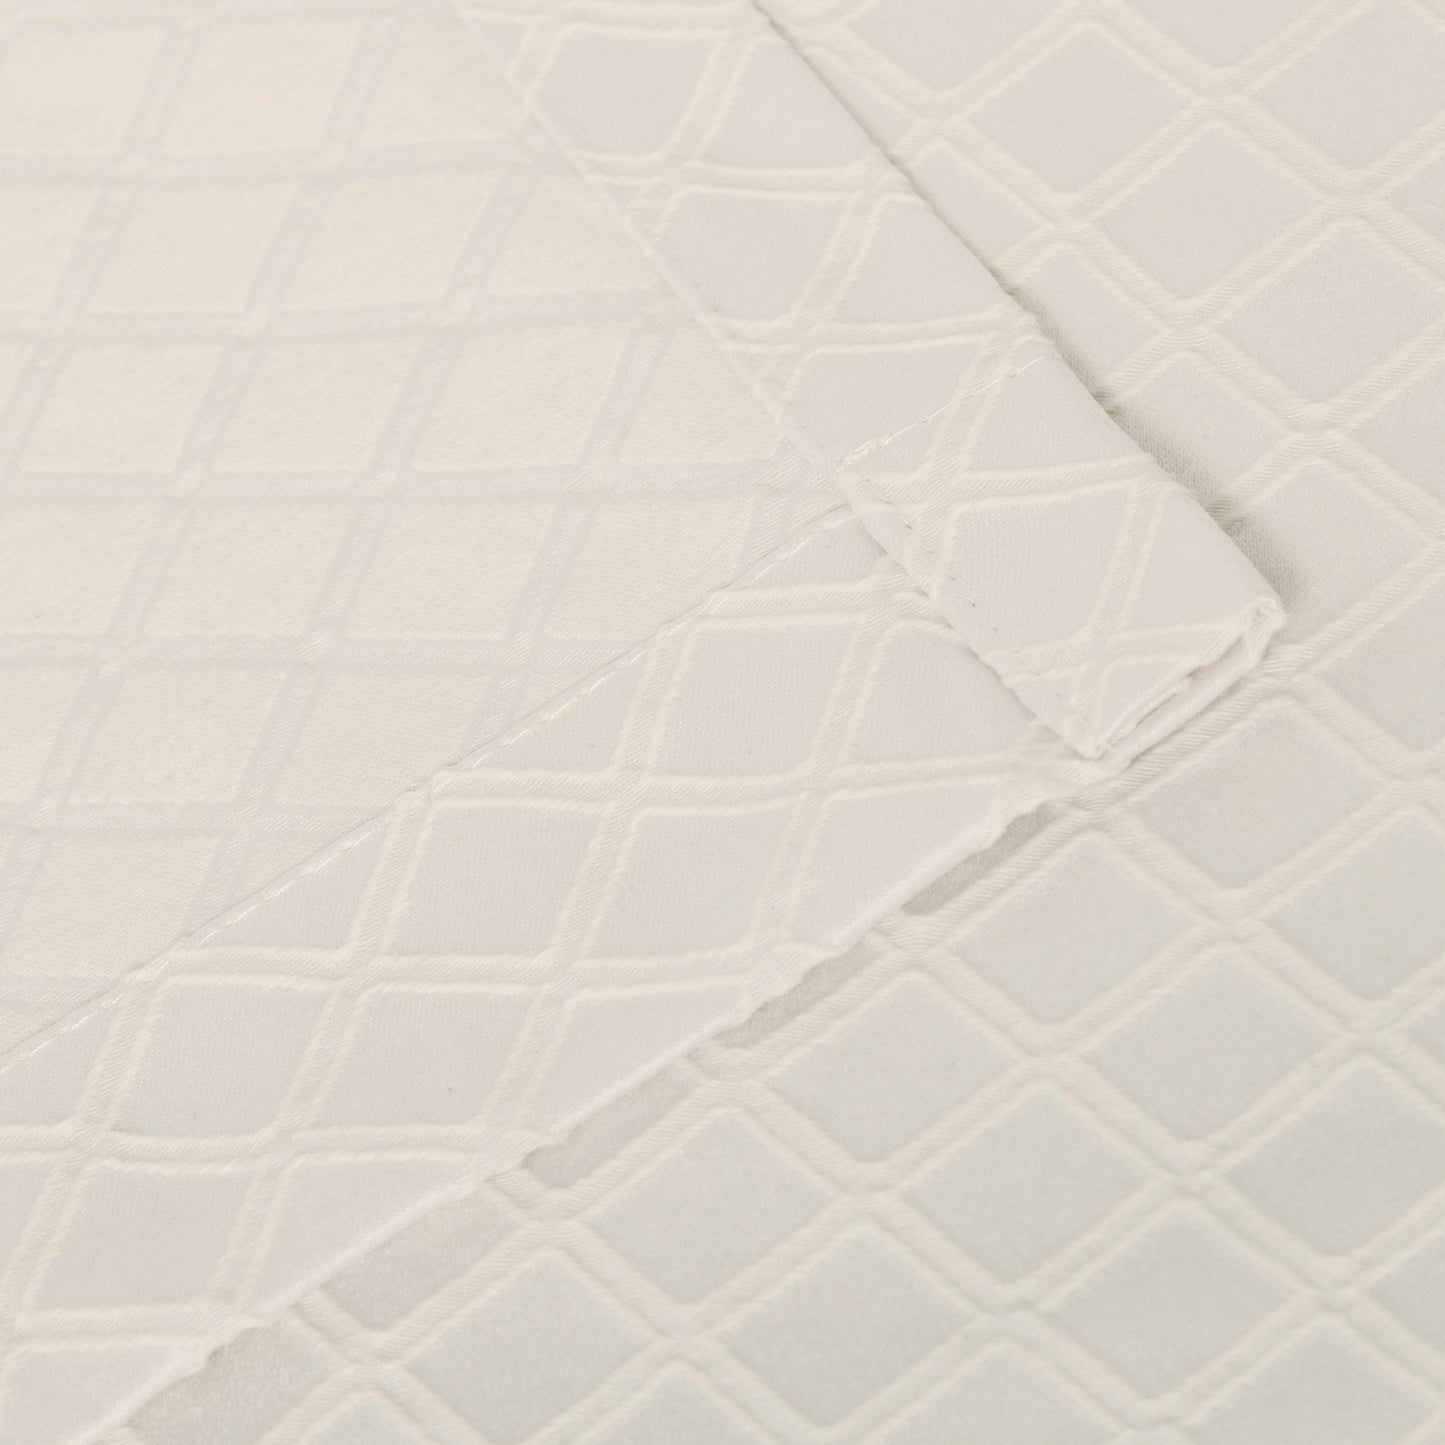 Westview Geometric Diamond Trellis Jacquard Grommet Curtain Panel Set FredCo